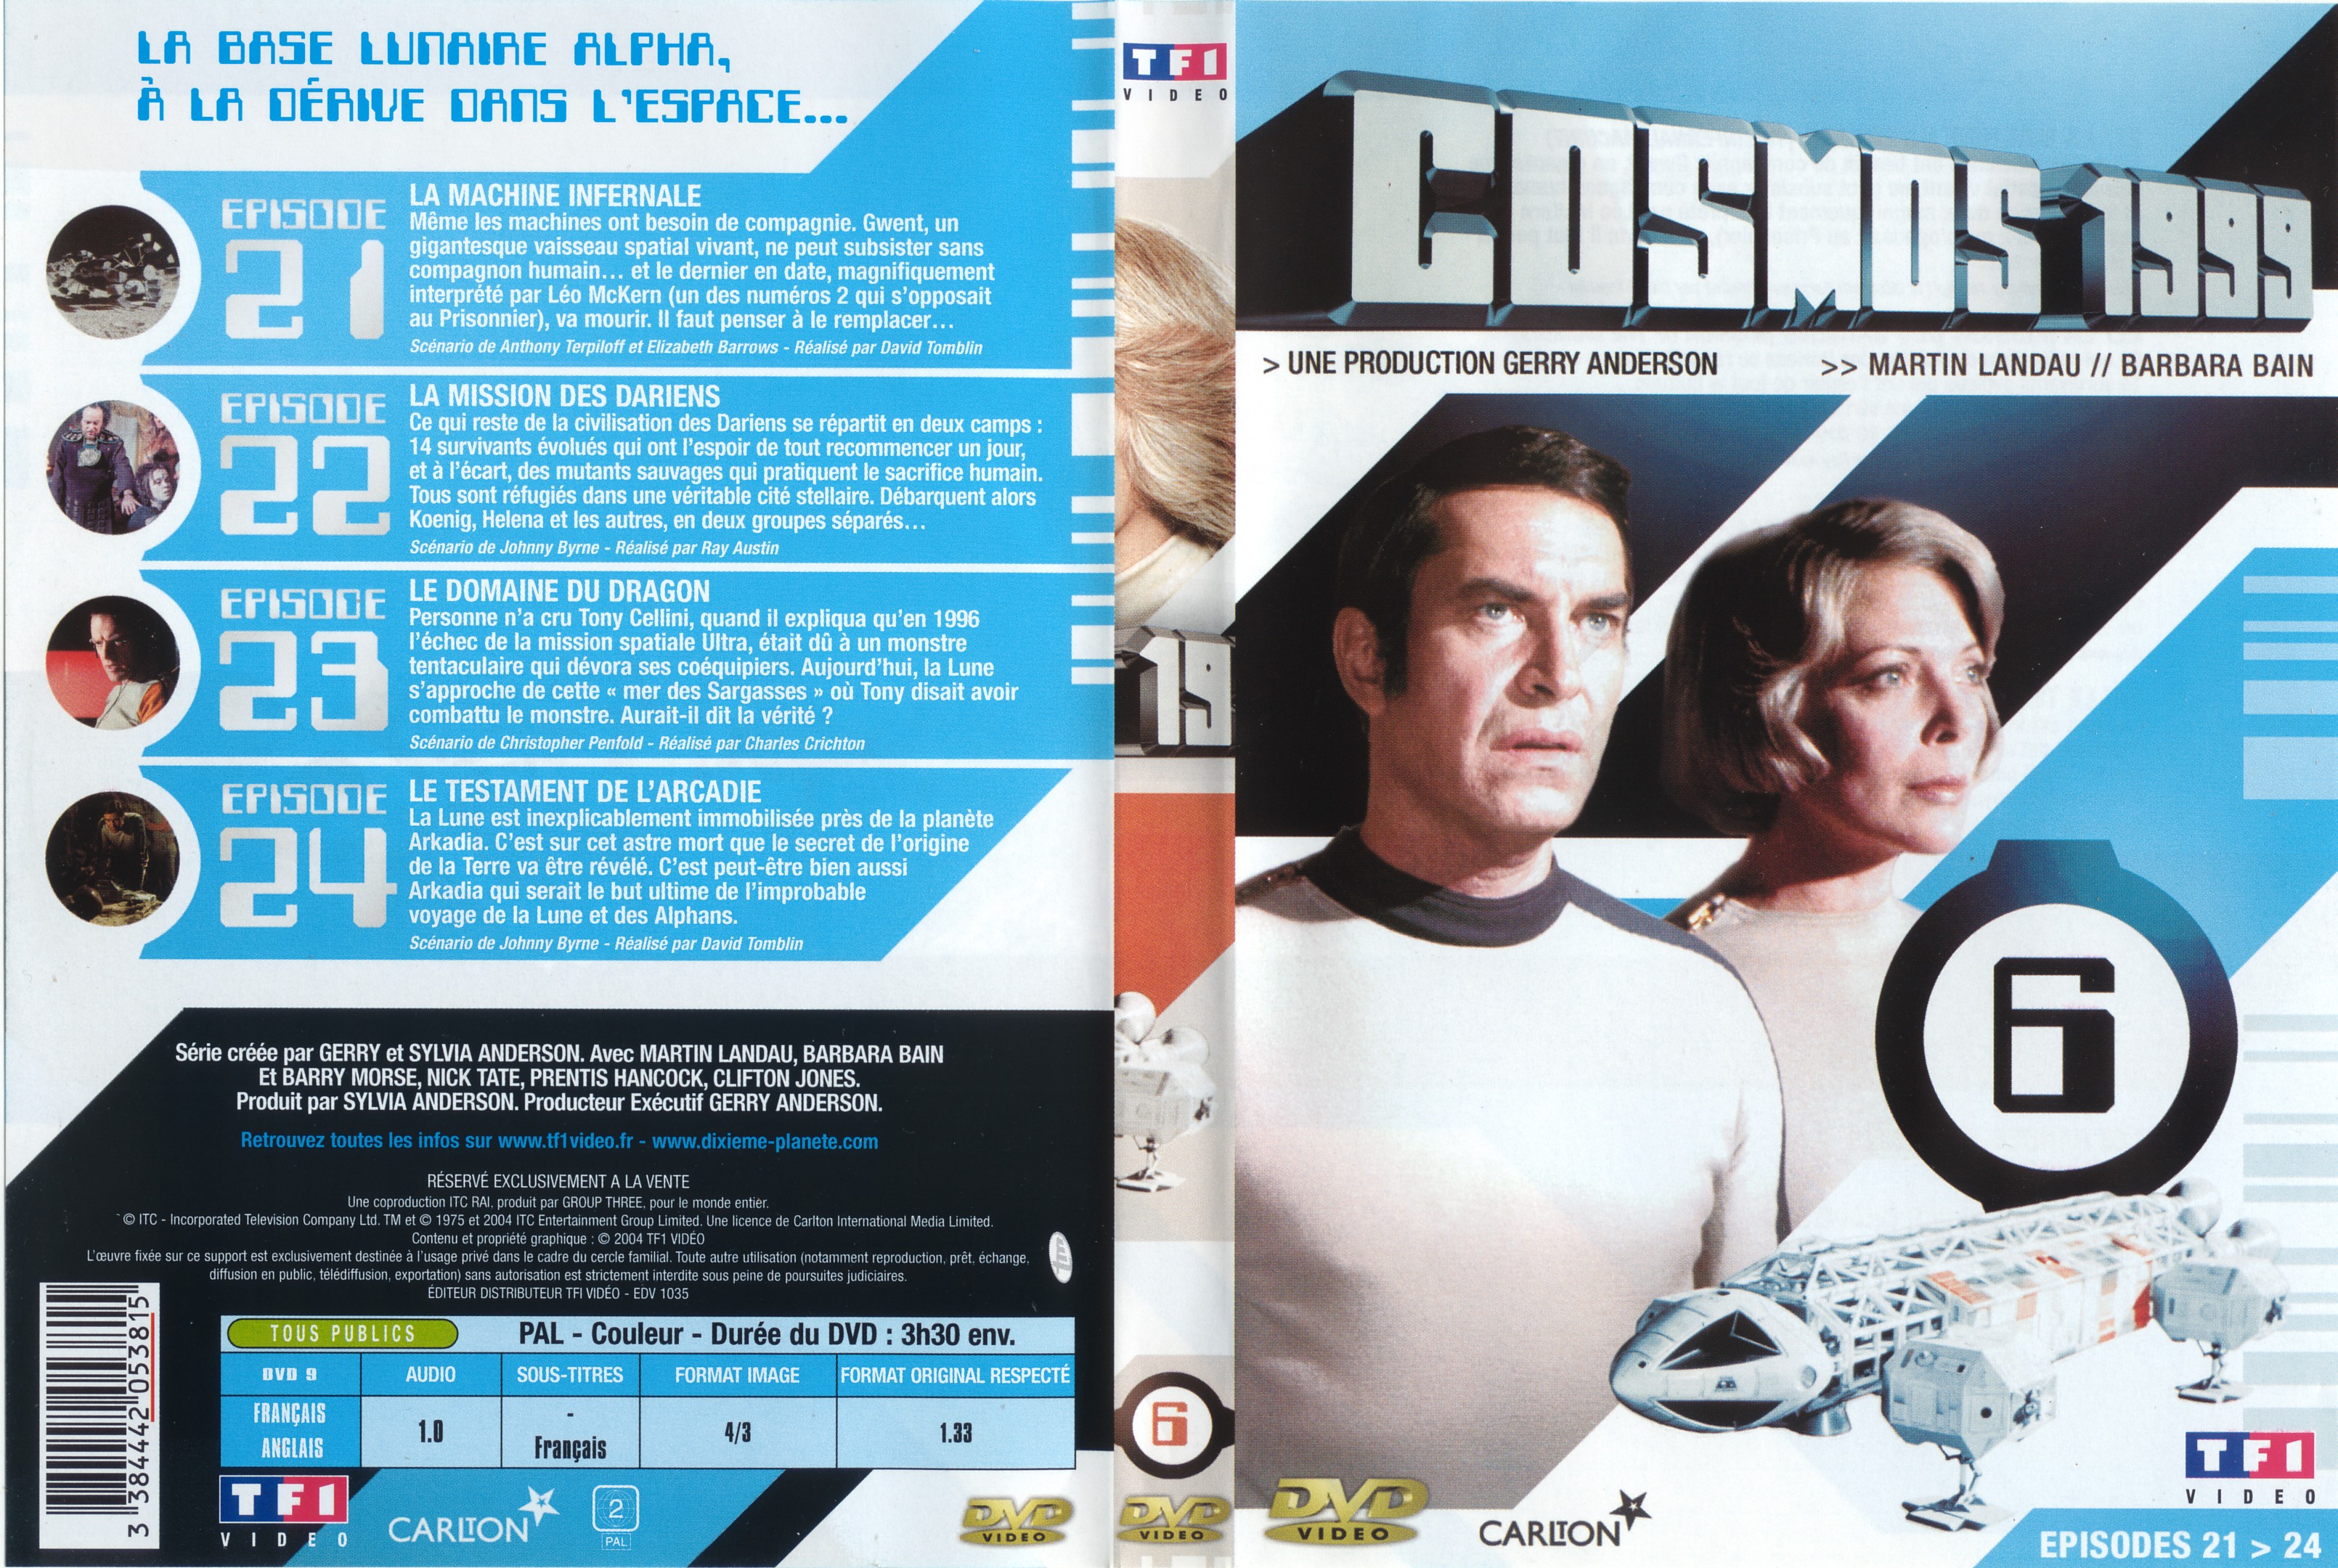 Jaquette DVD Cosmos 1999 saison 1 dvd 6